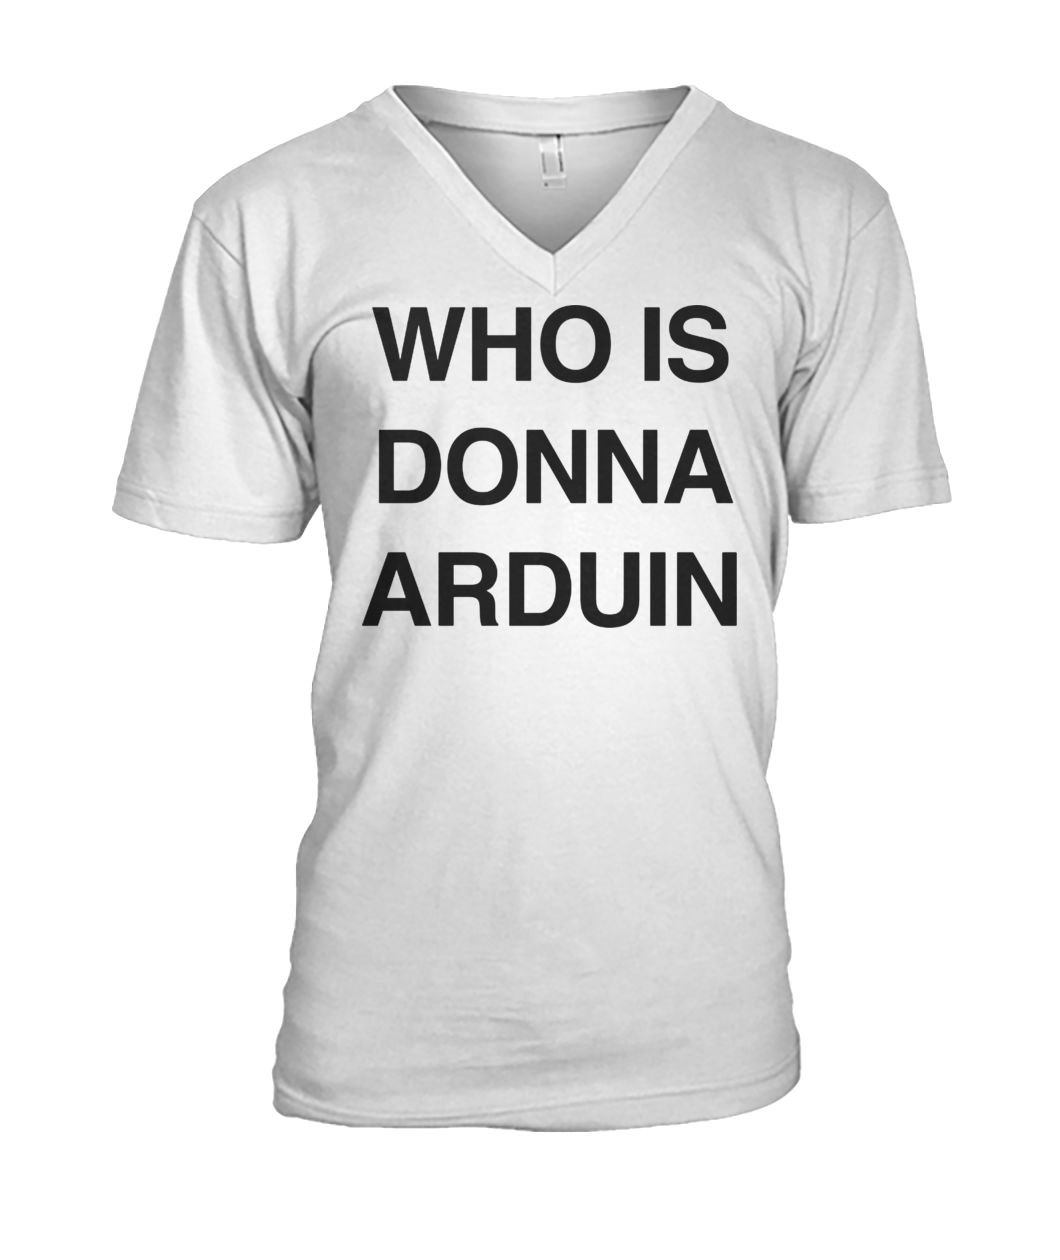 Who is donna arduin mens v-neck